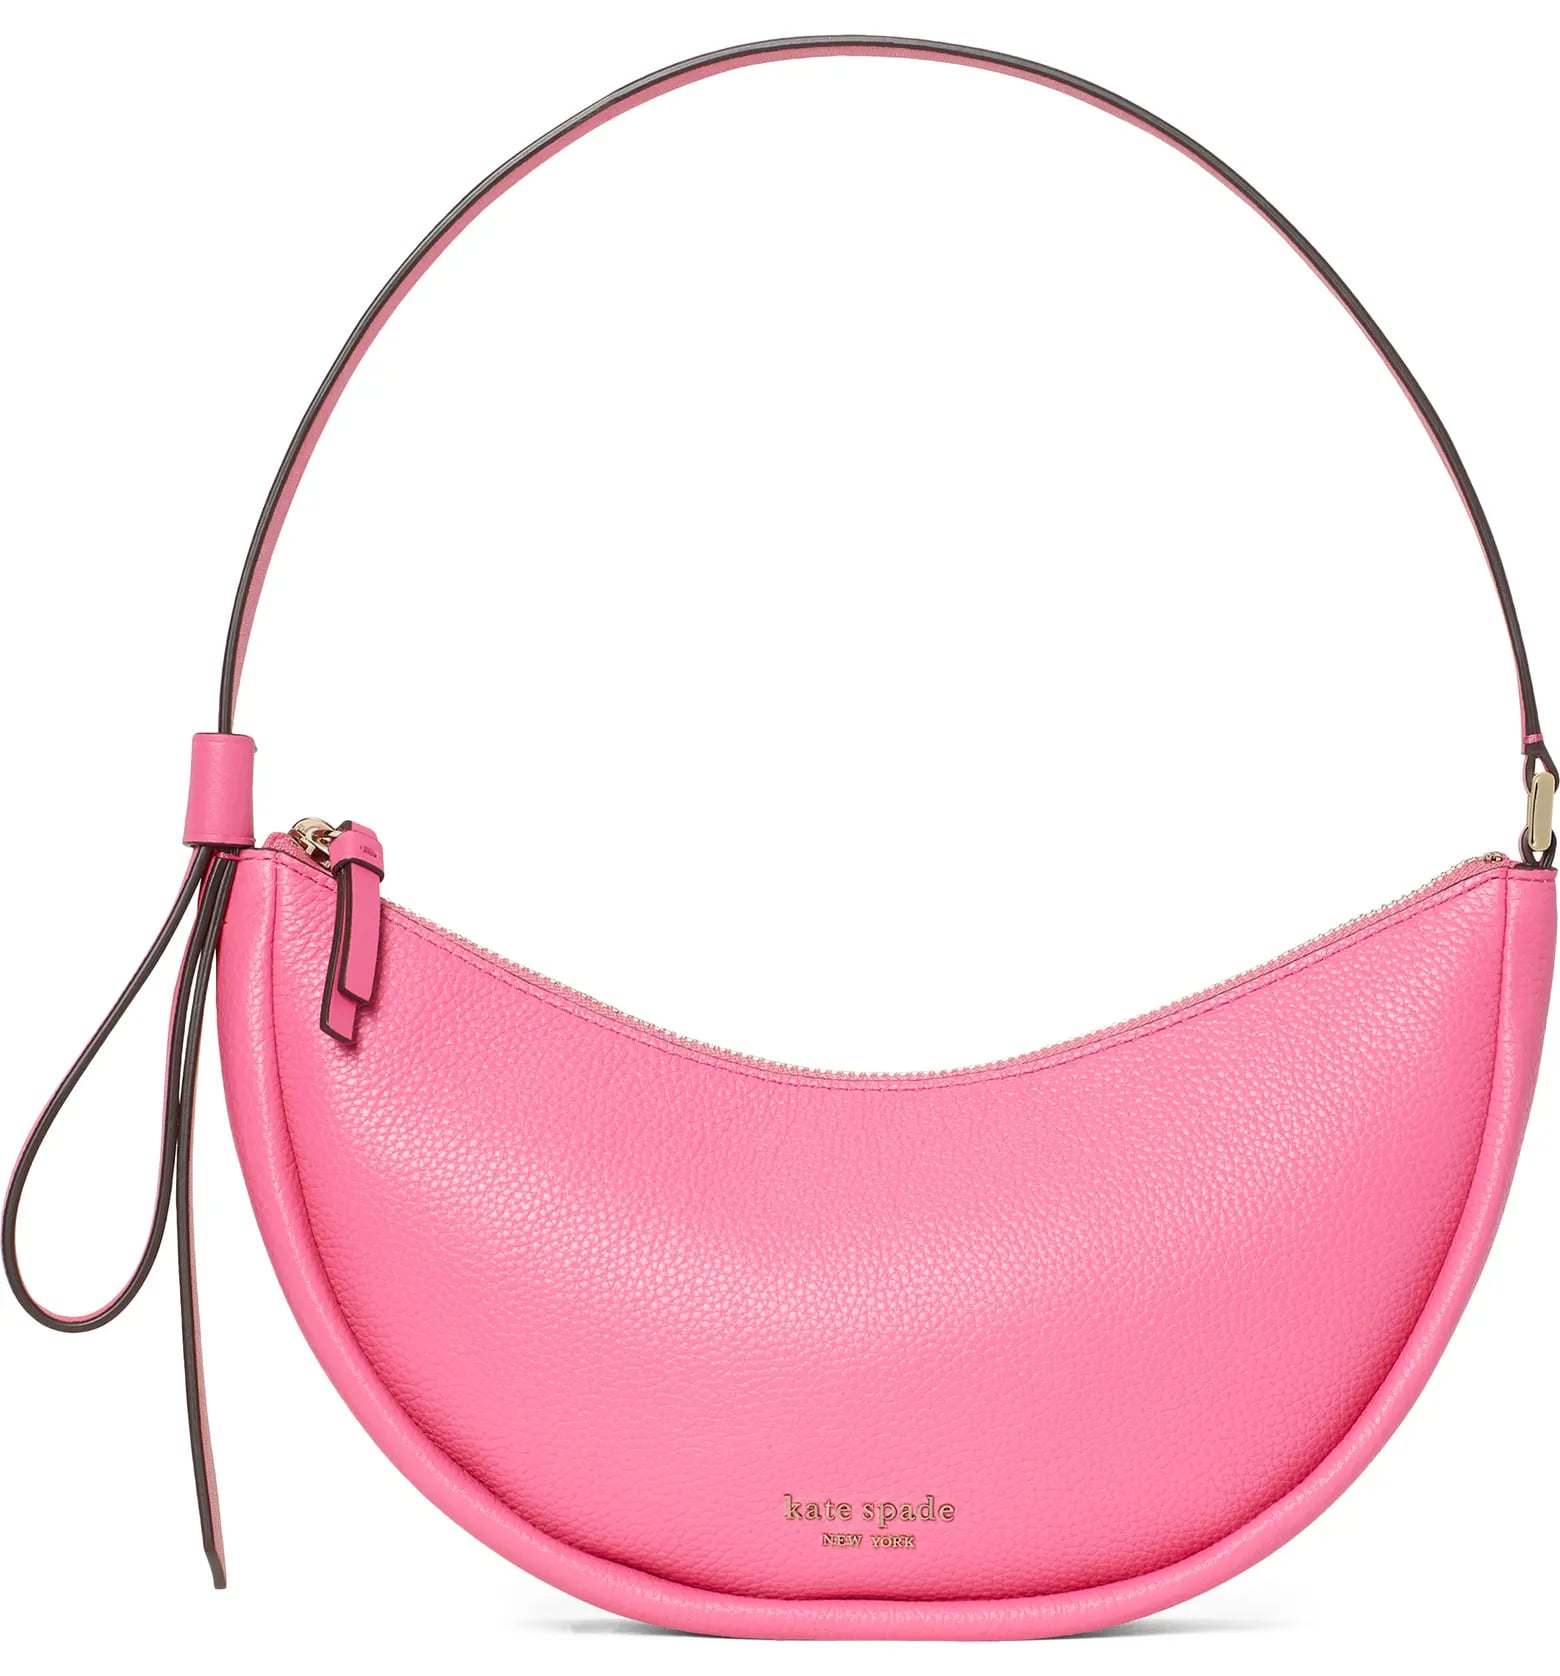 Kate Spade New York Smile Pebbled Leather Small Crossbody Bag - Serene Pink